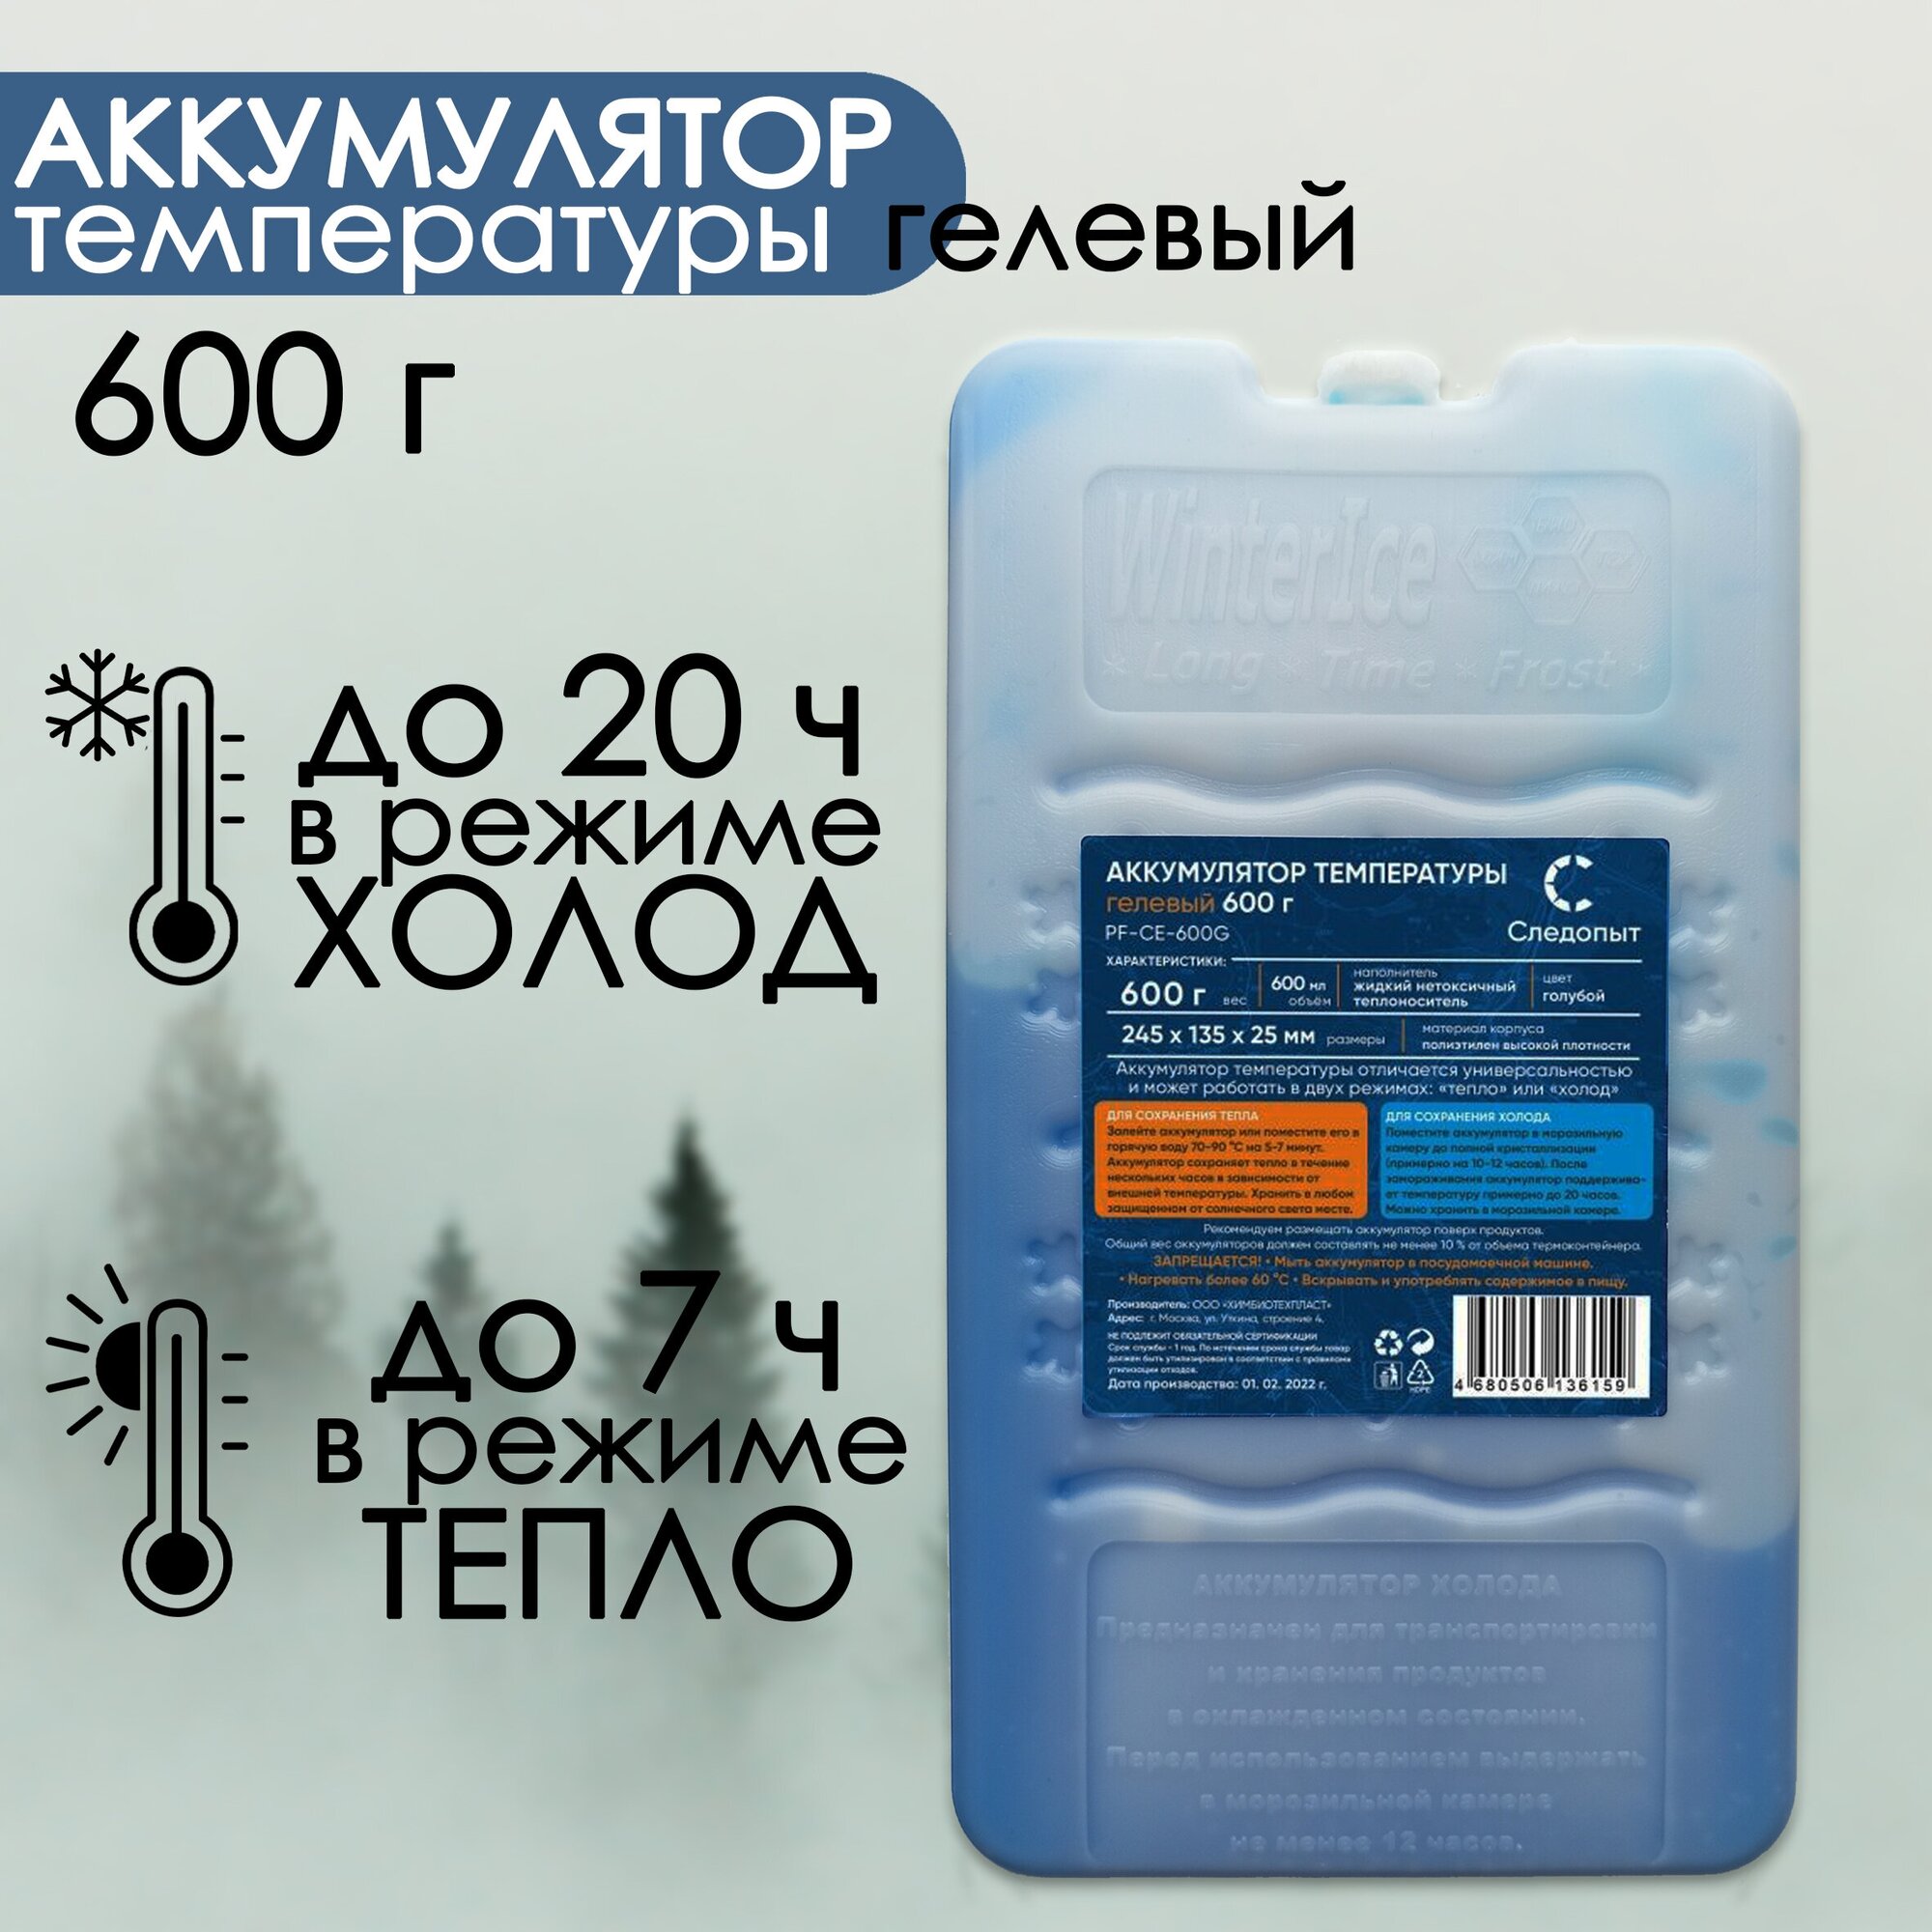 Аккумулятор холода гелевый для термосумки, Следопыт, 600 гр, 1 шт.